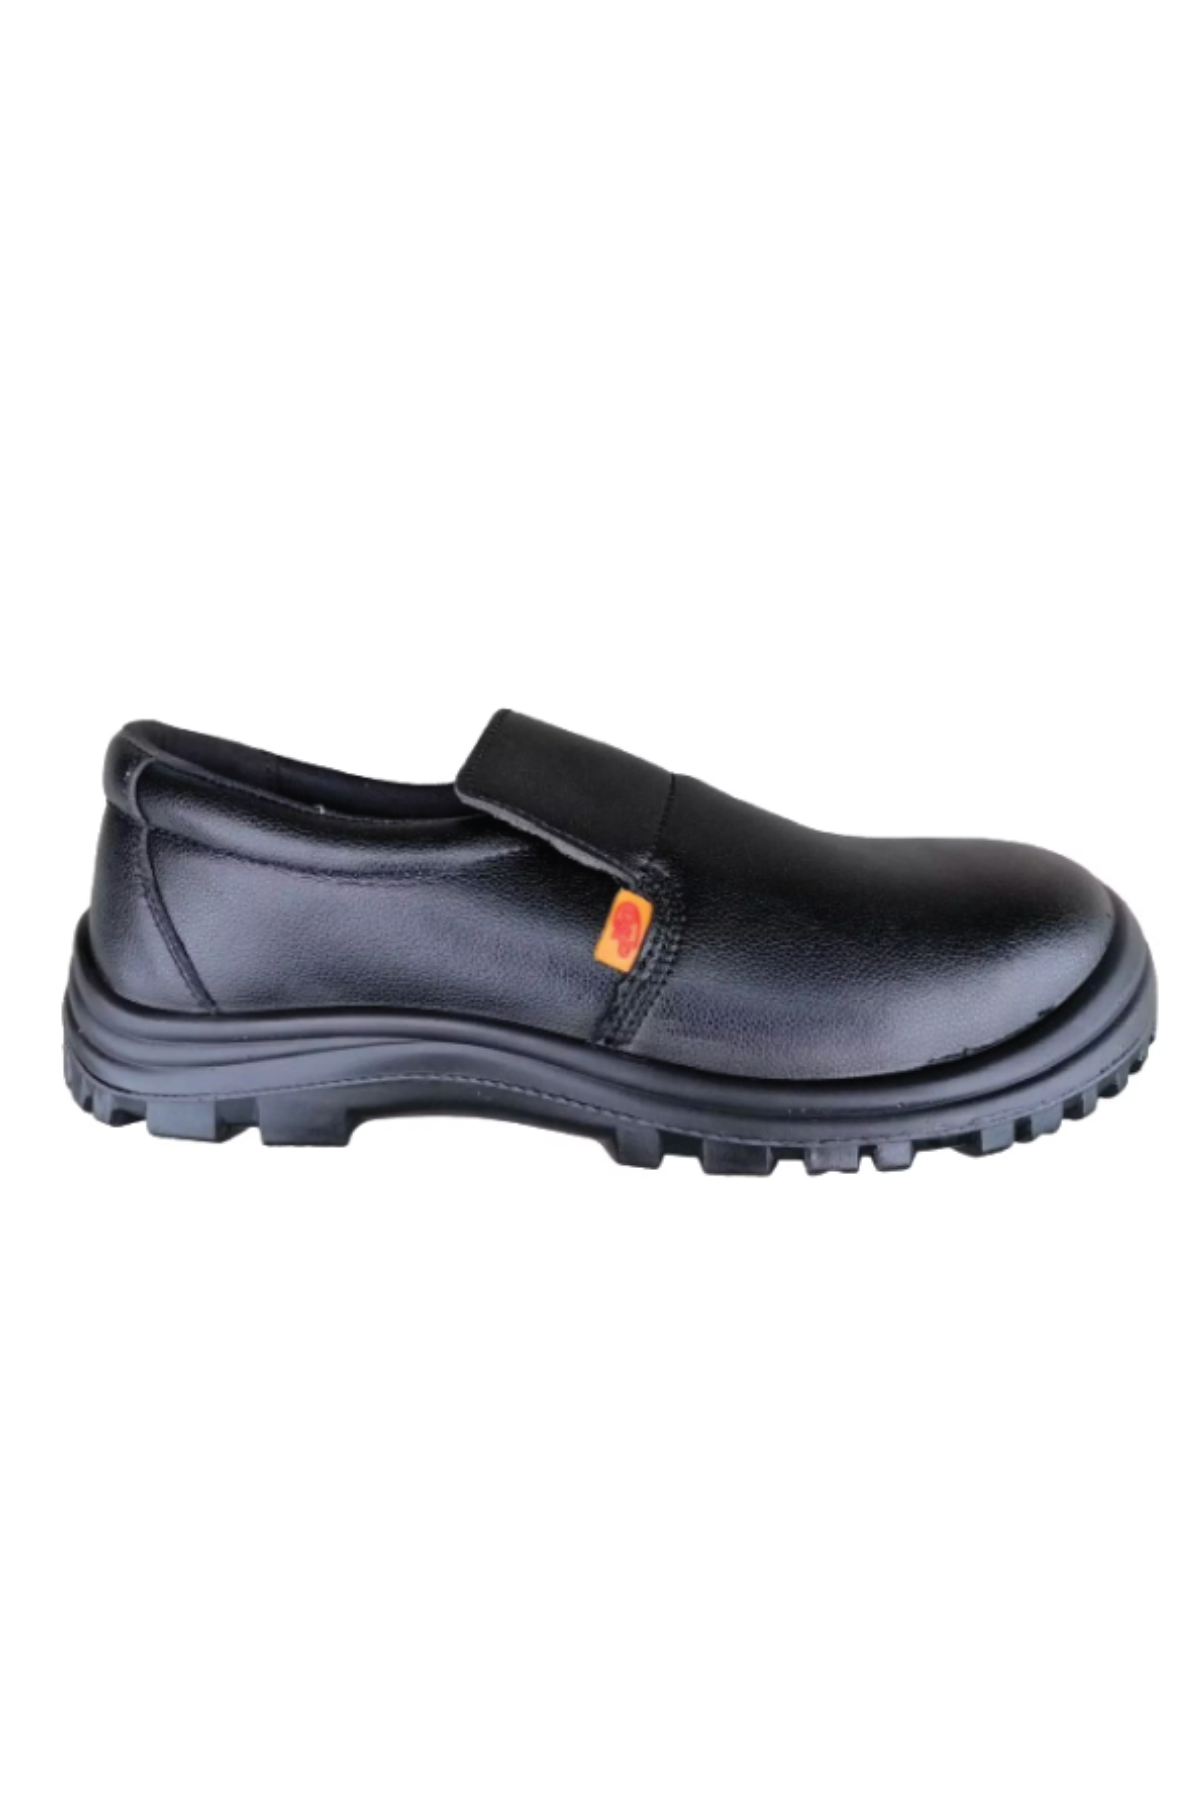 black safety shoe